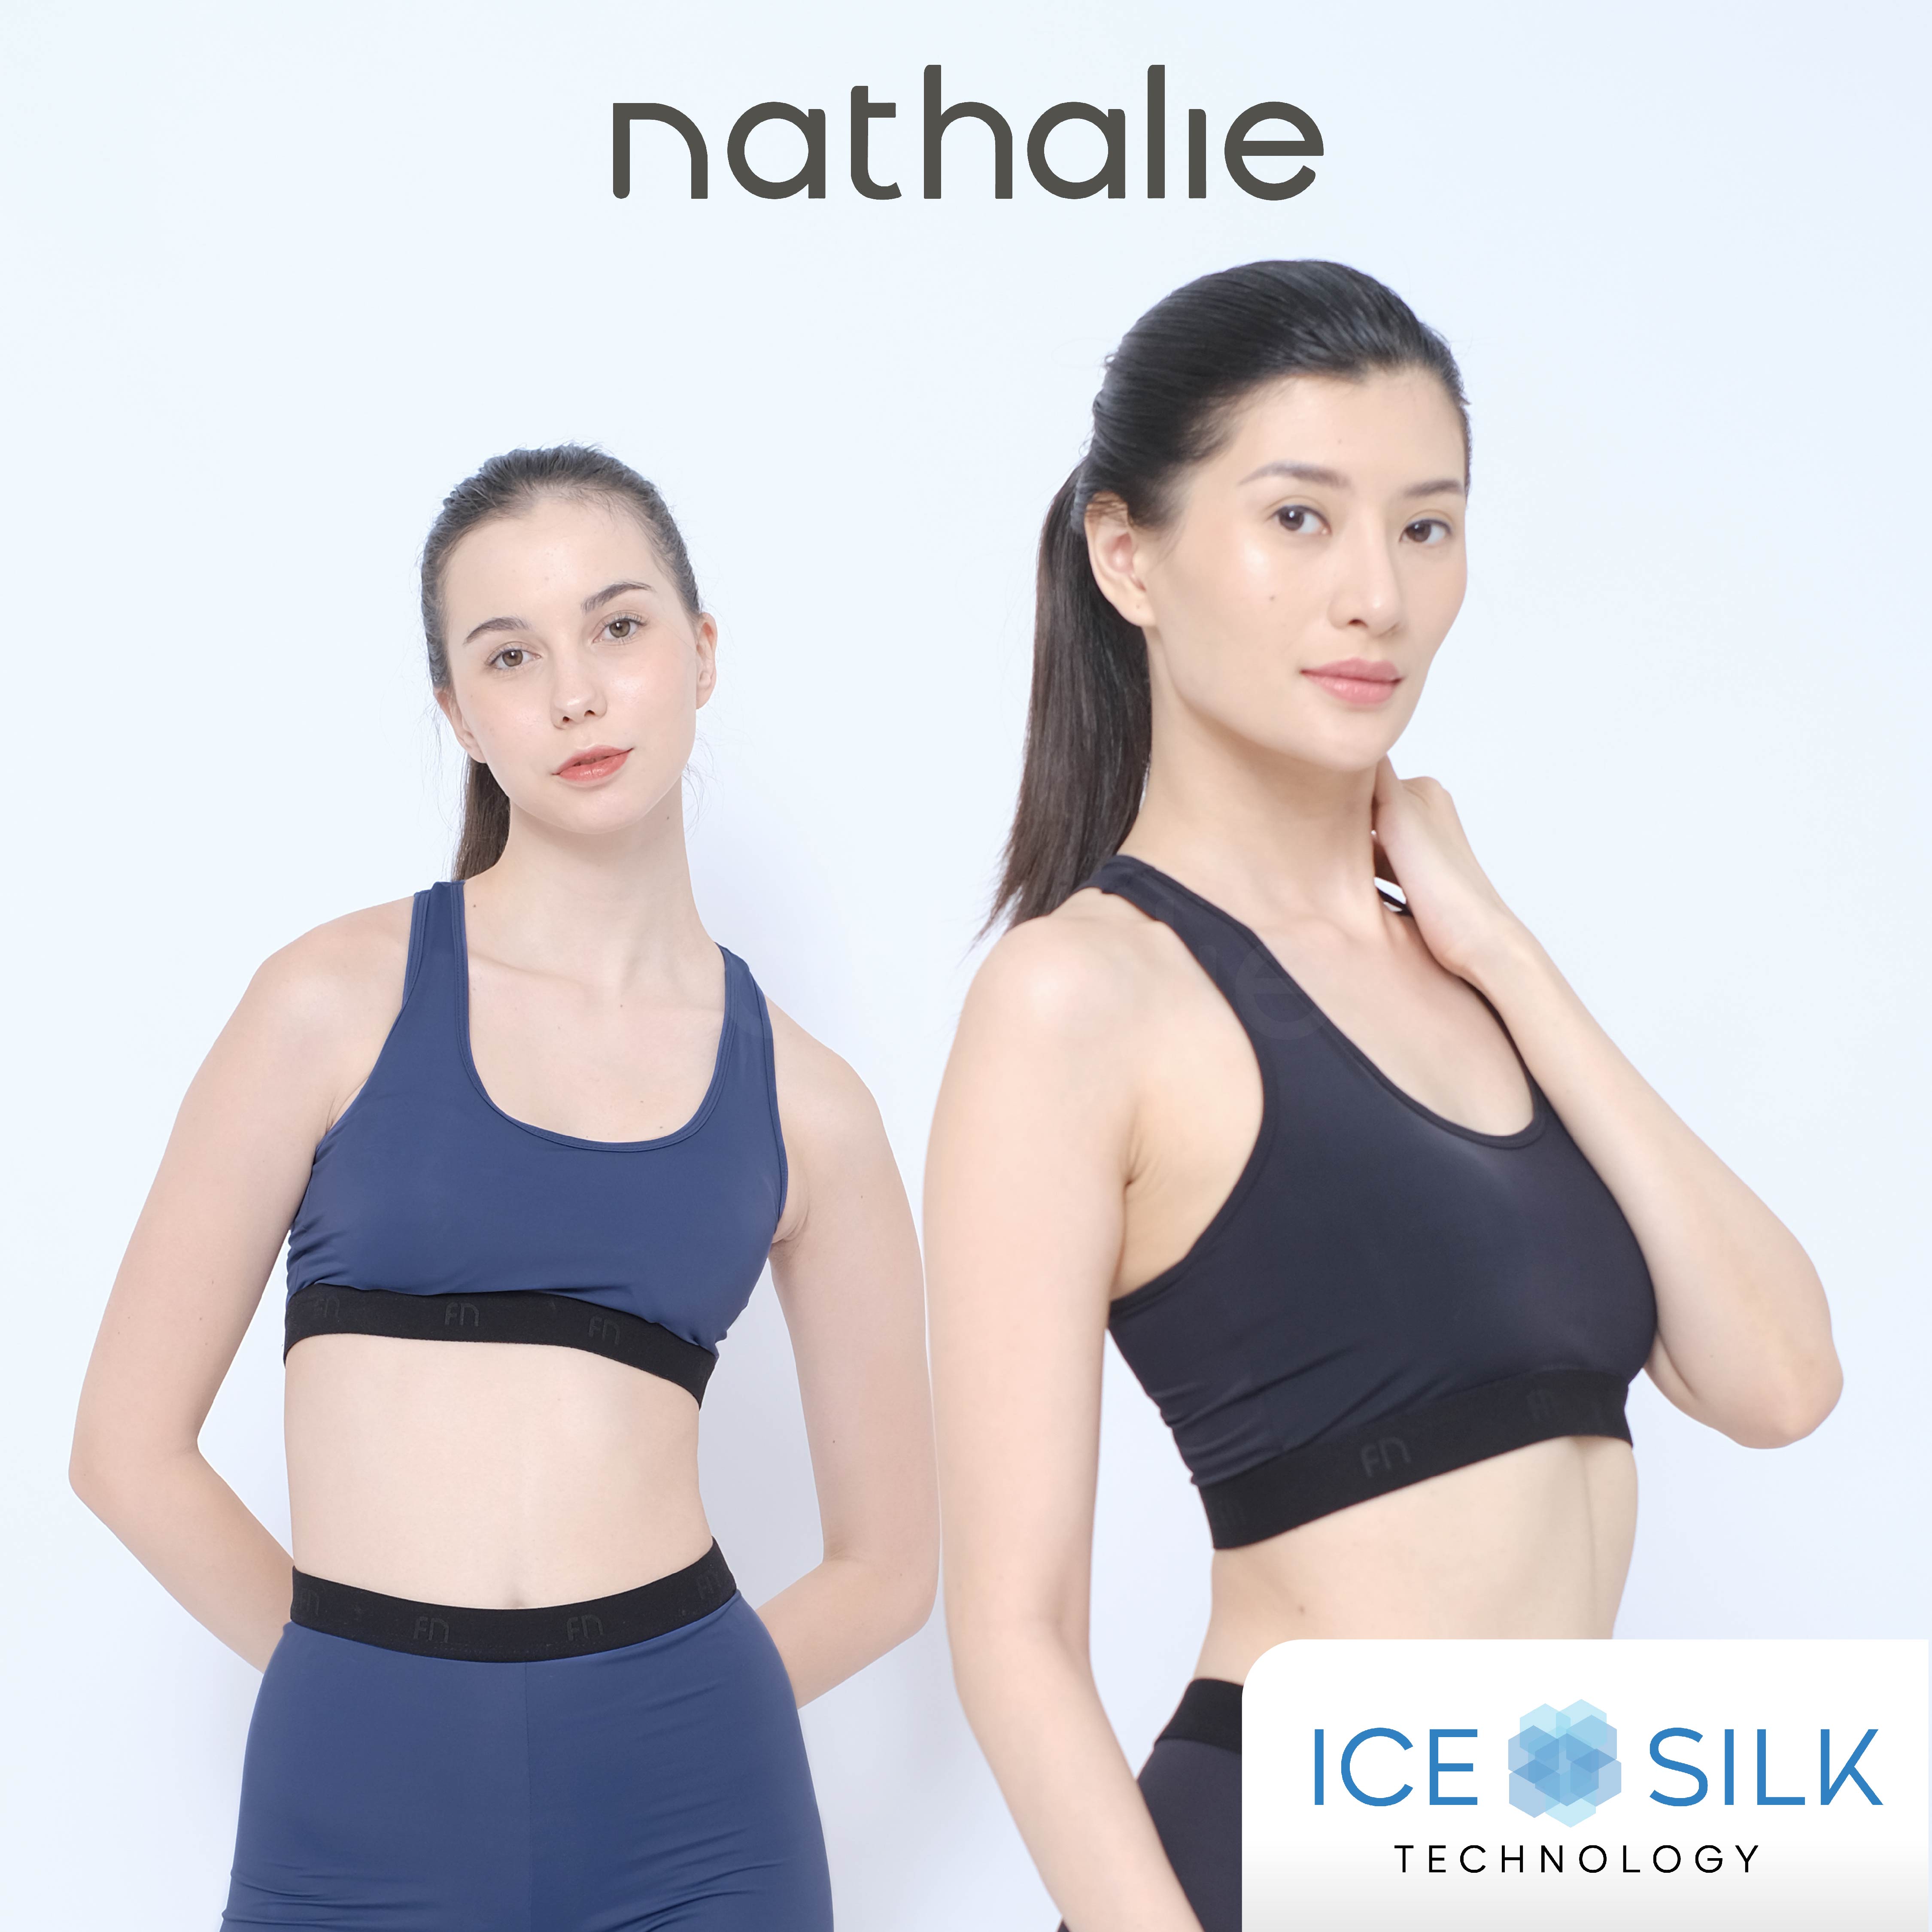 Nathalie Sport Bra Dewasa Cewek Yoga Ice Silk Bra Olahraga Wanita 1 Pcs NTB 3453